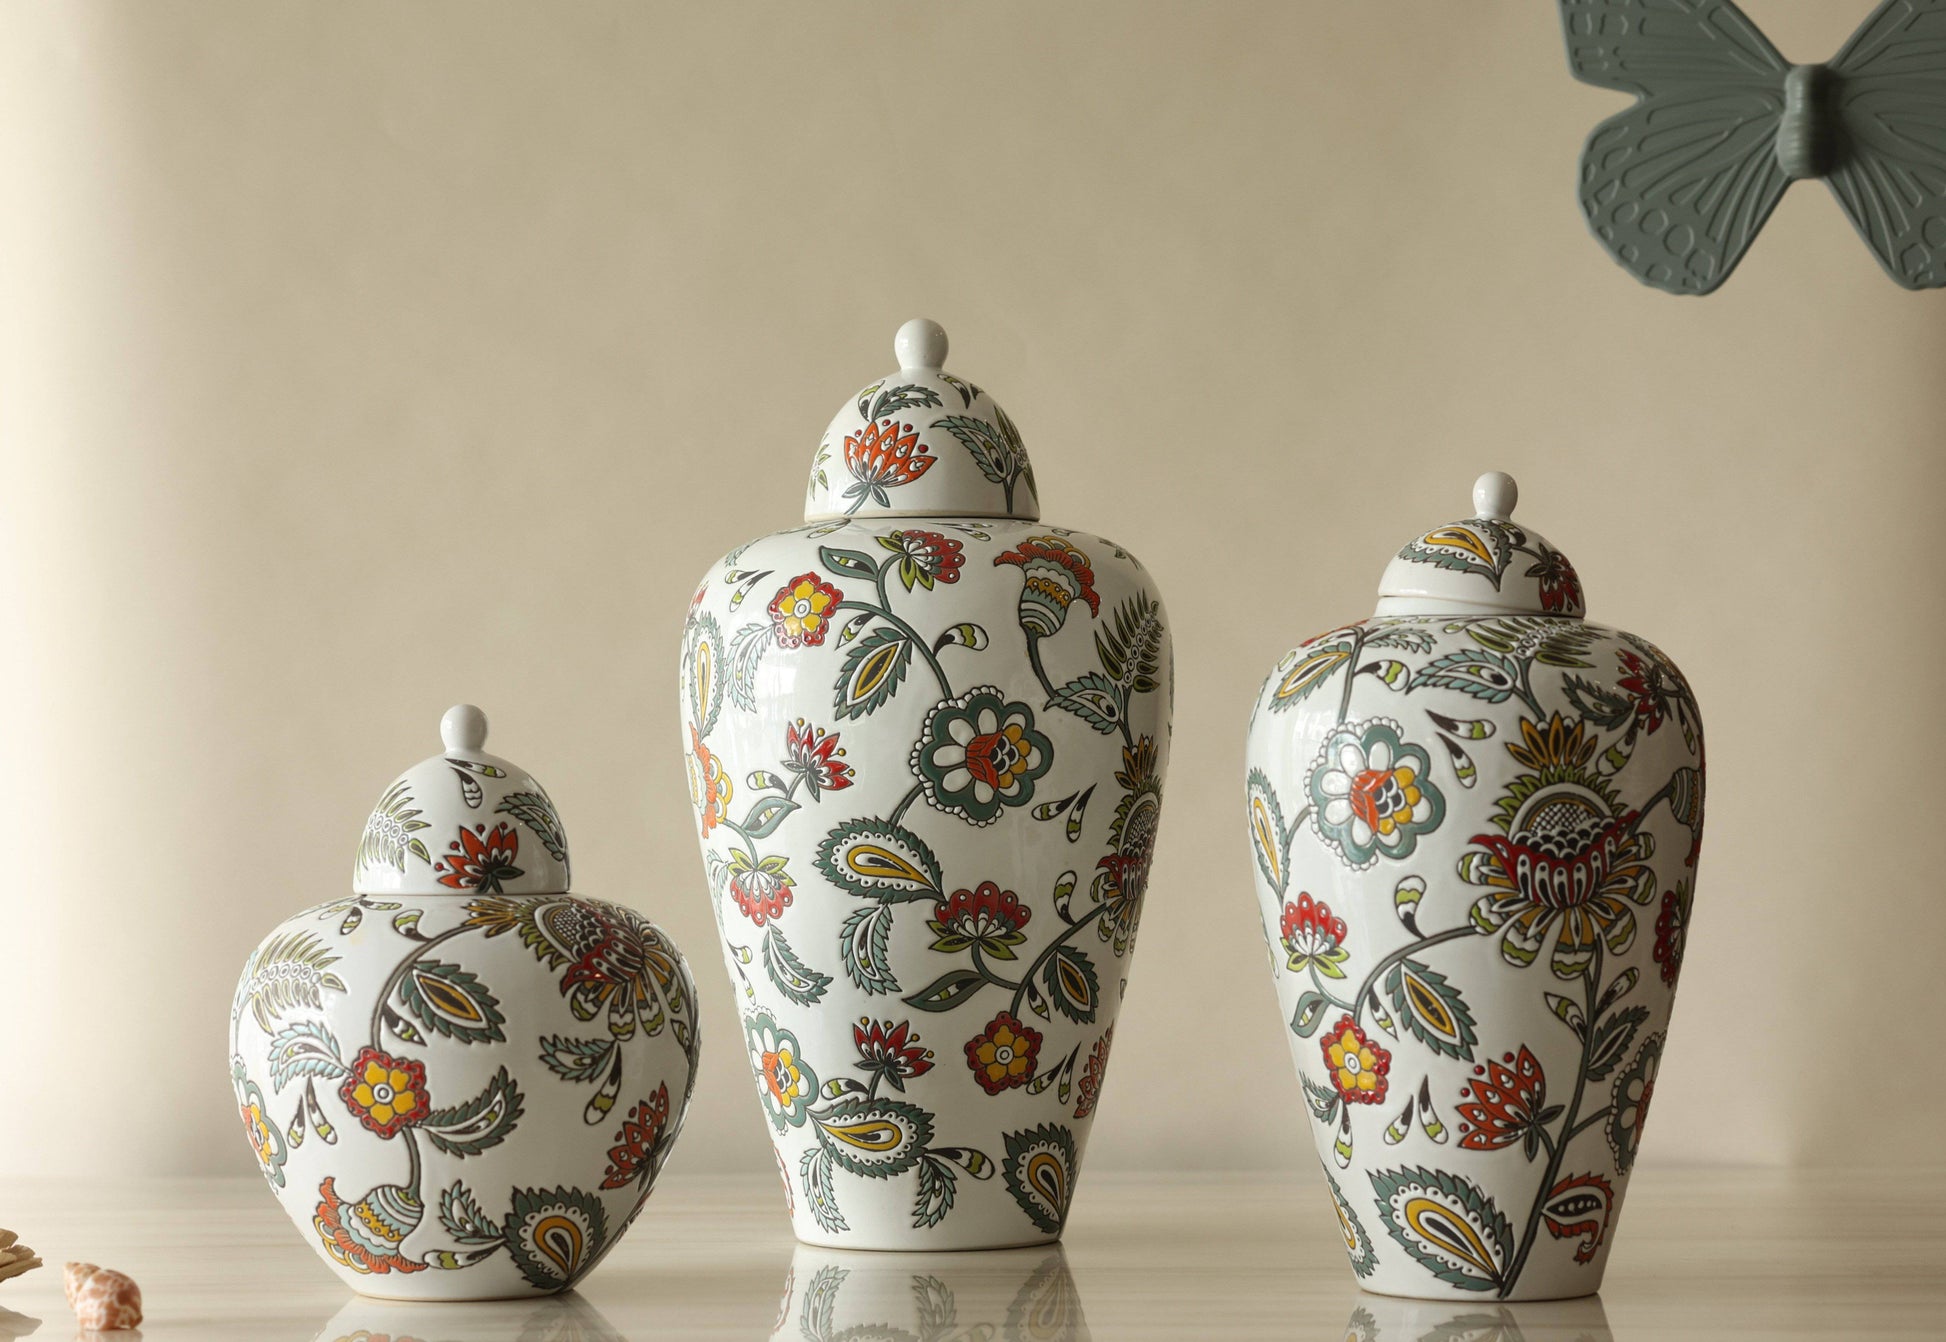 Decor Floral Luxury Jar (Medium) | The Decor Circle